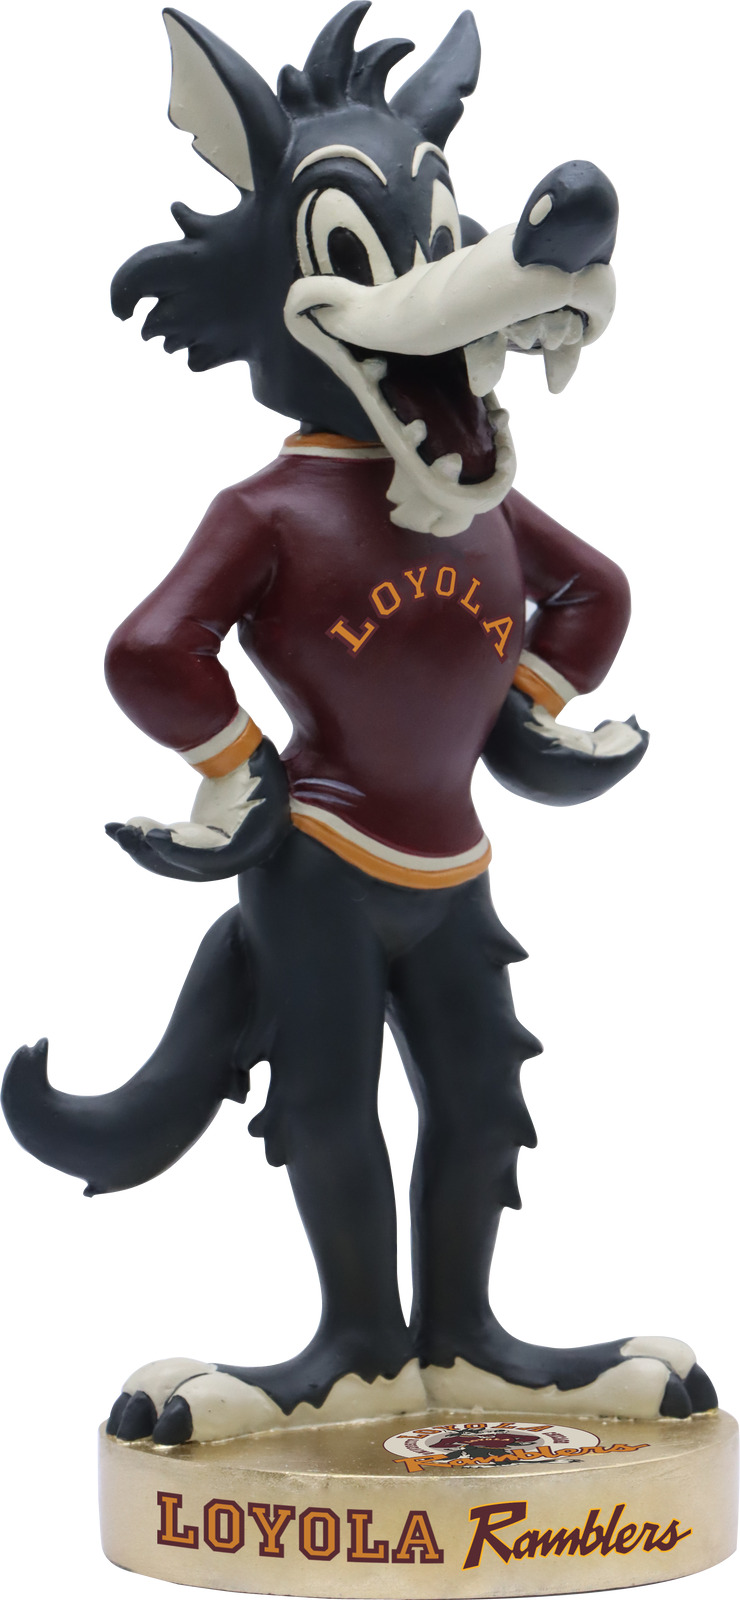 Loyola Ramblers Vintage Maroon Bobblehead NCAA College